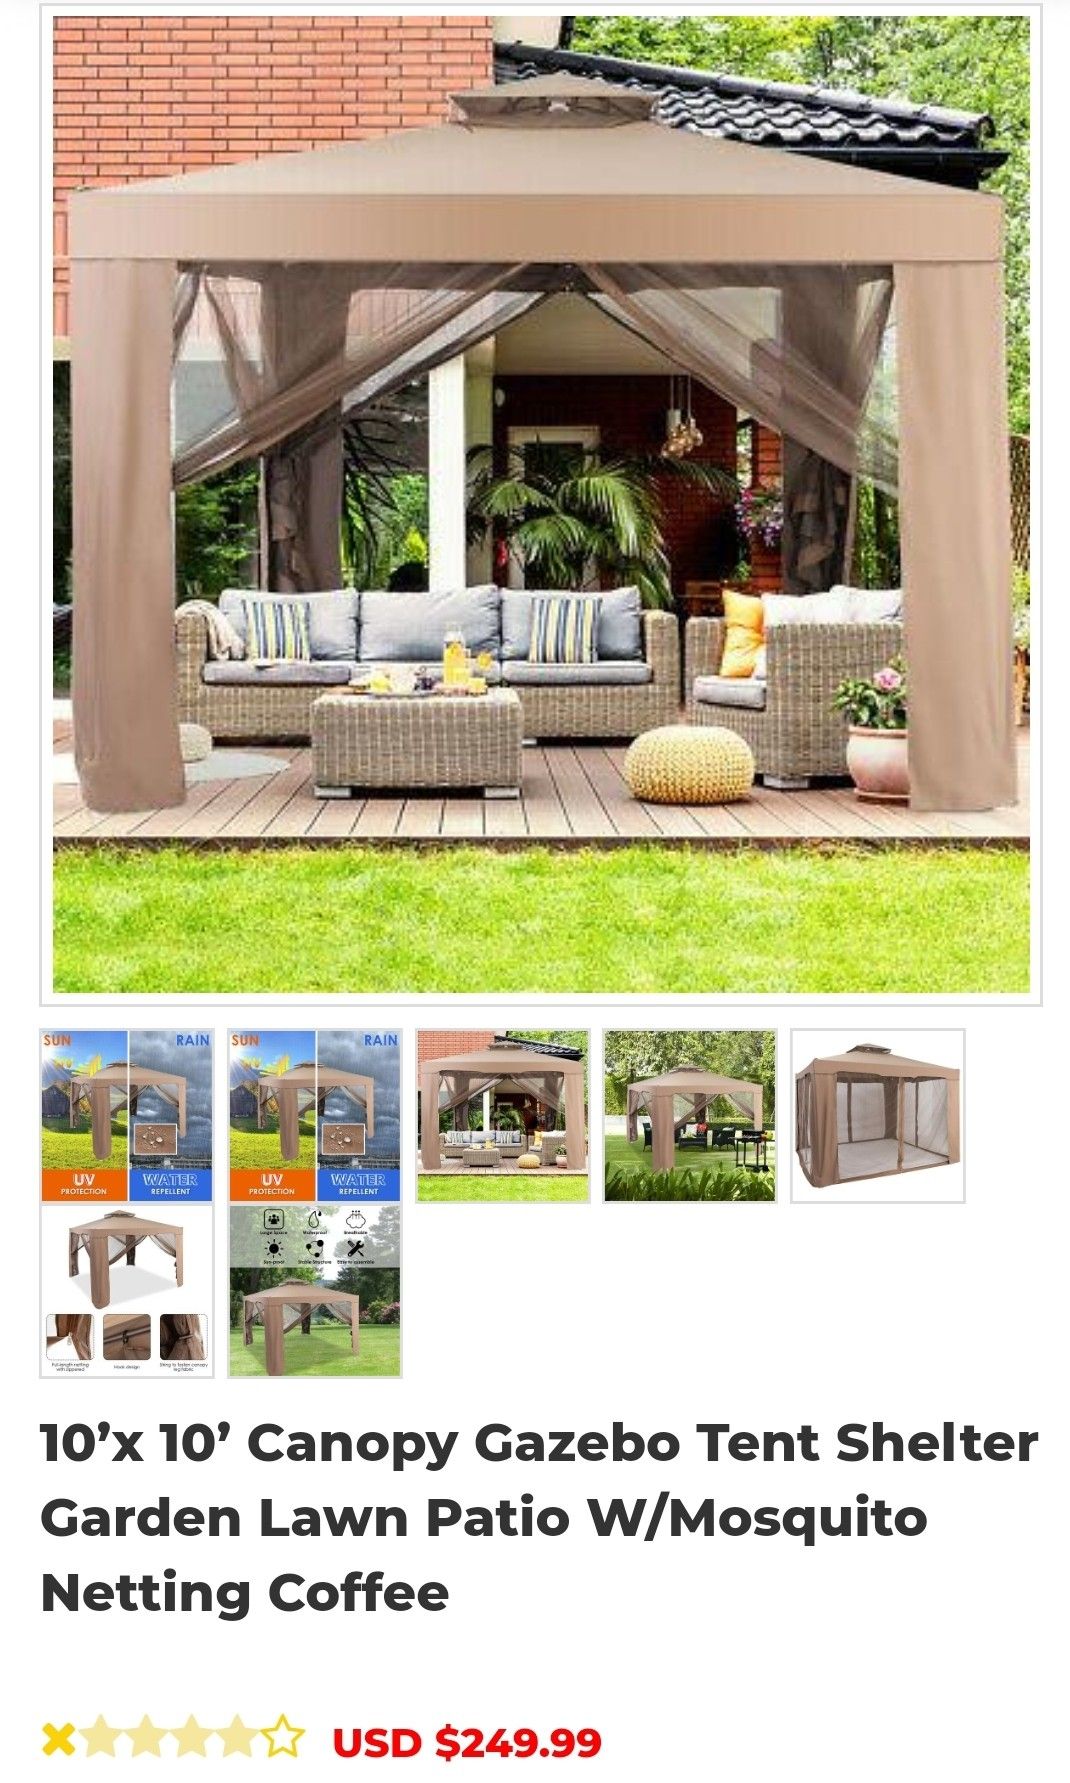 10’x 10’ Canopy Gazebo Tent Shelter Garden Lawn Patio W/Mosquito